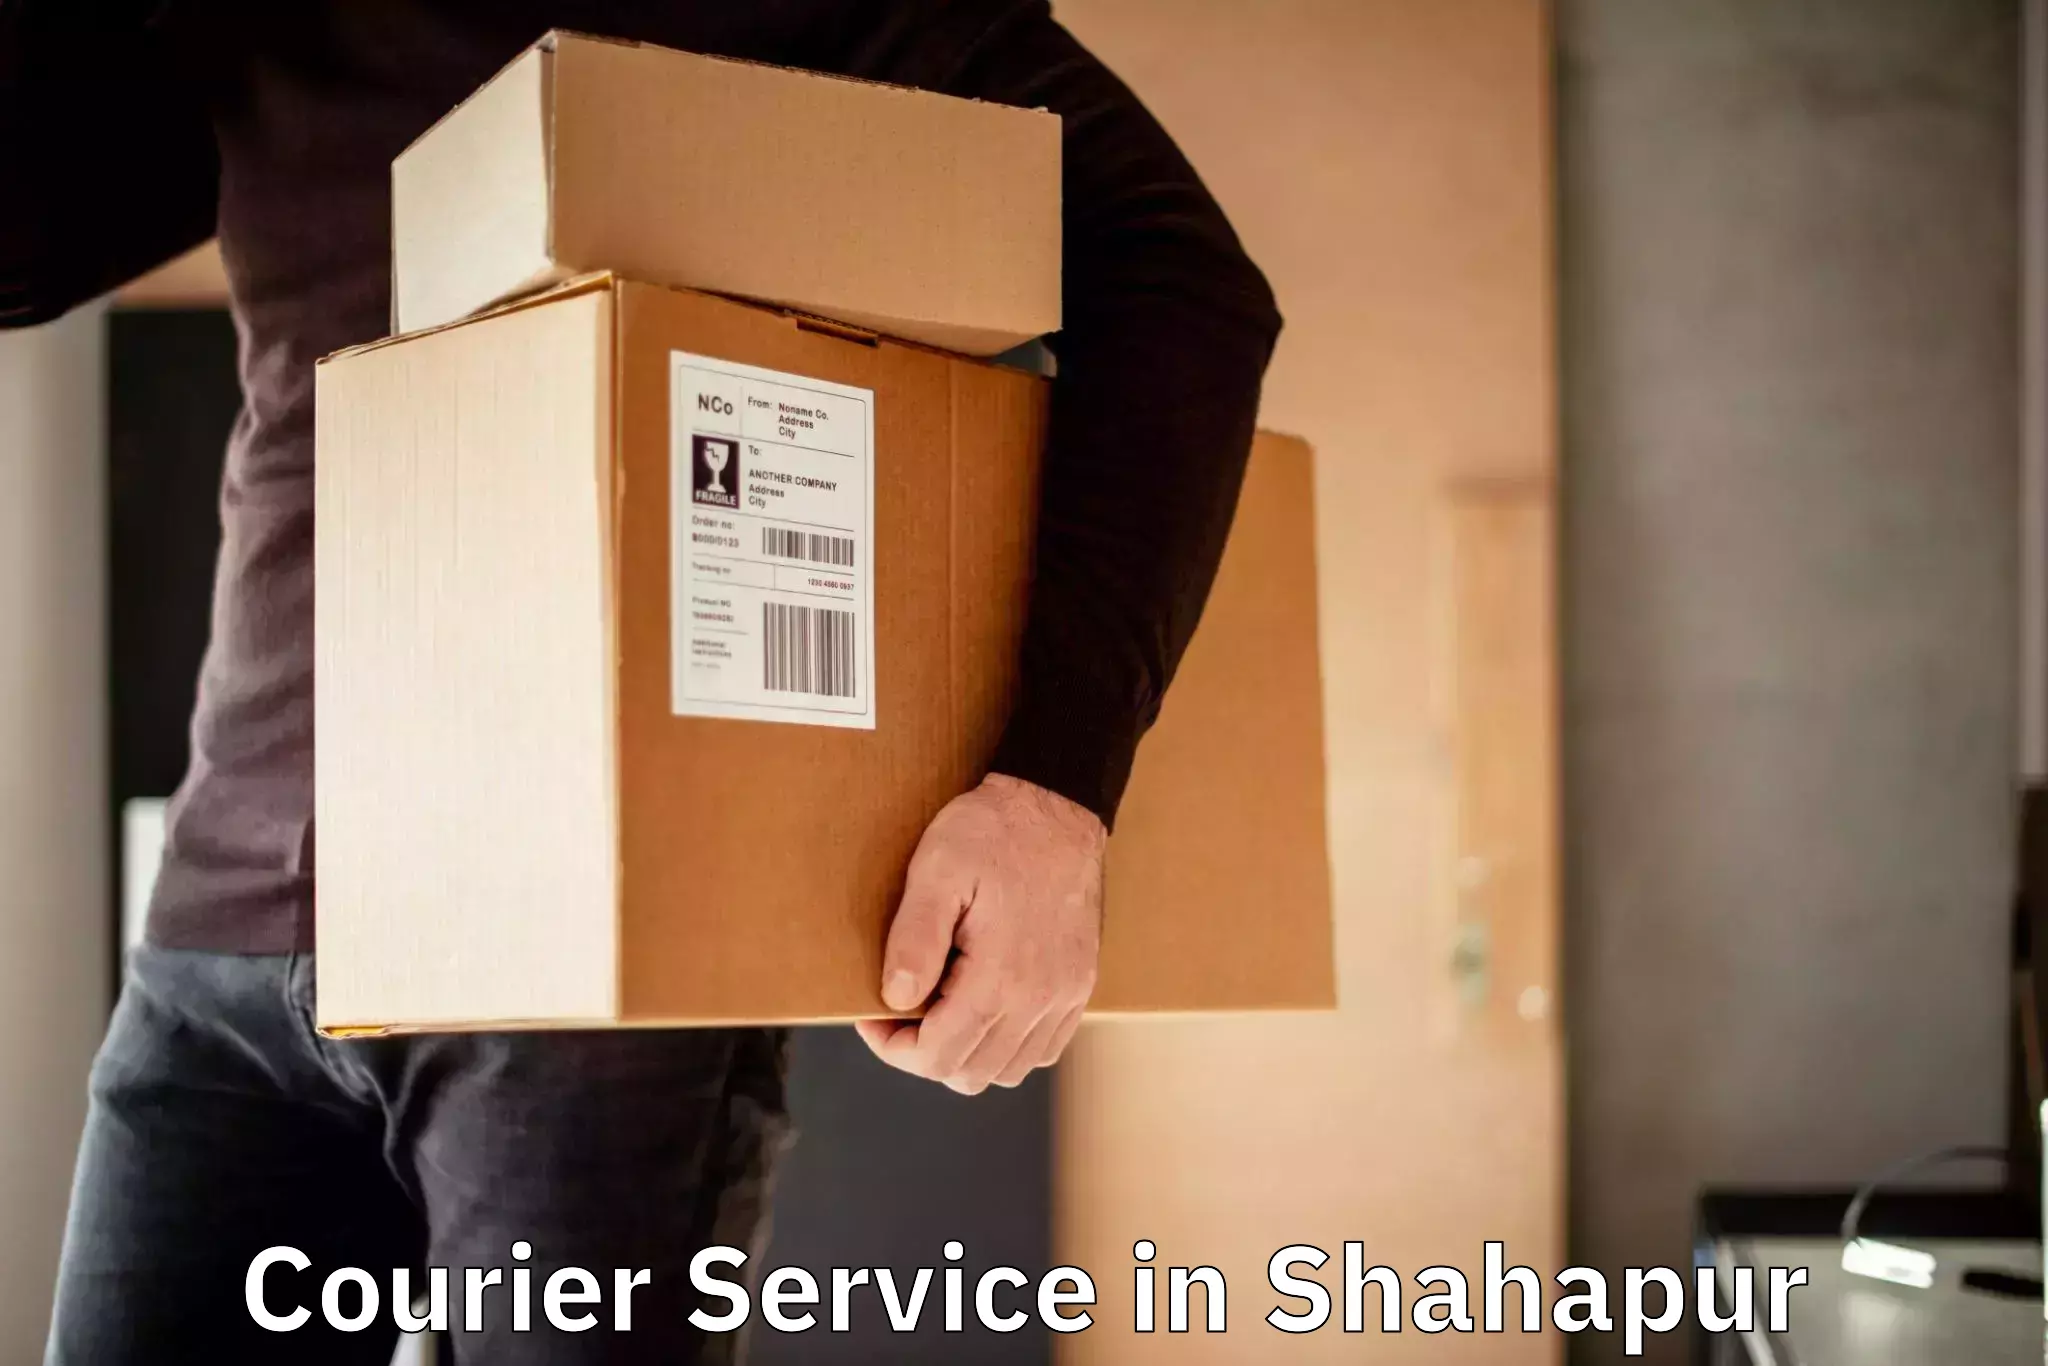 Logistics service provider in Shahapur